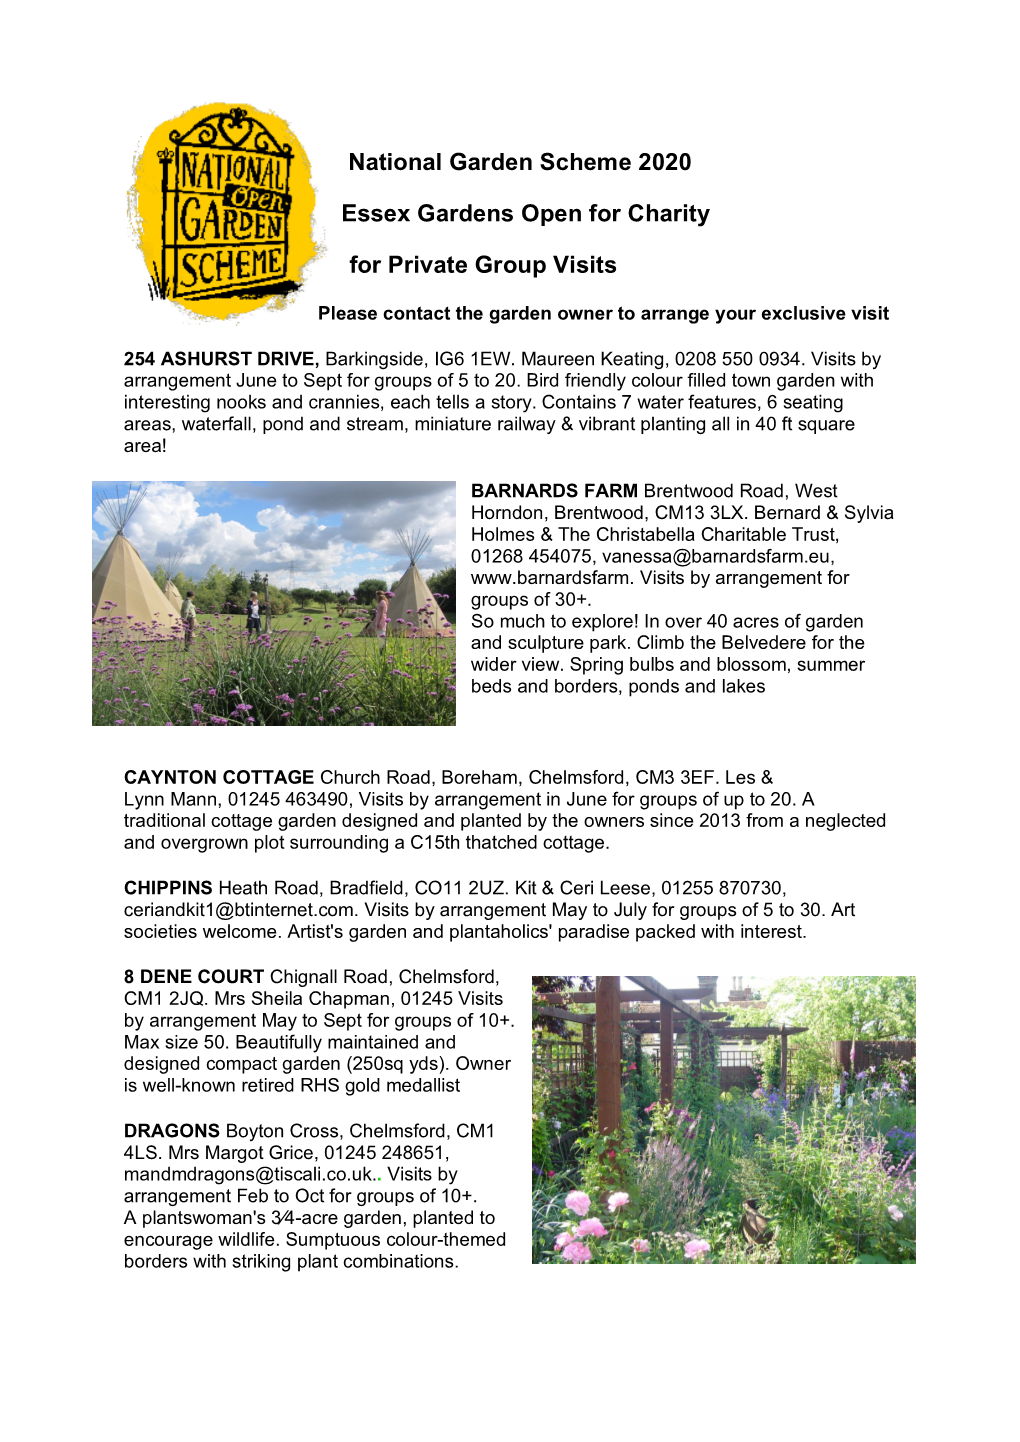 National Garden Scheme 2020 Essex Gardens Open for Charity For